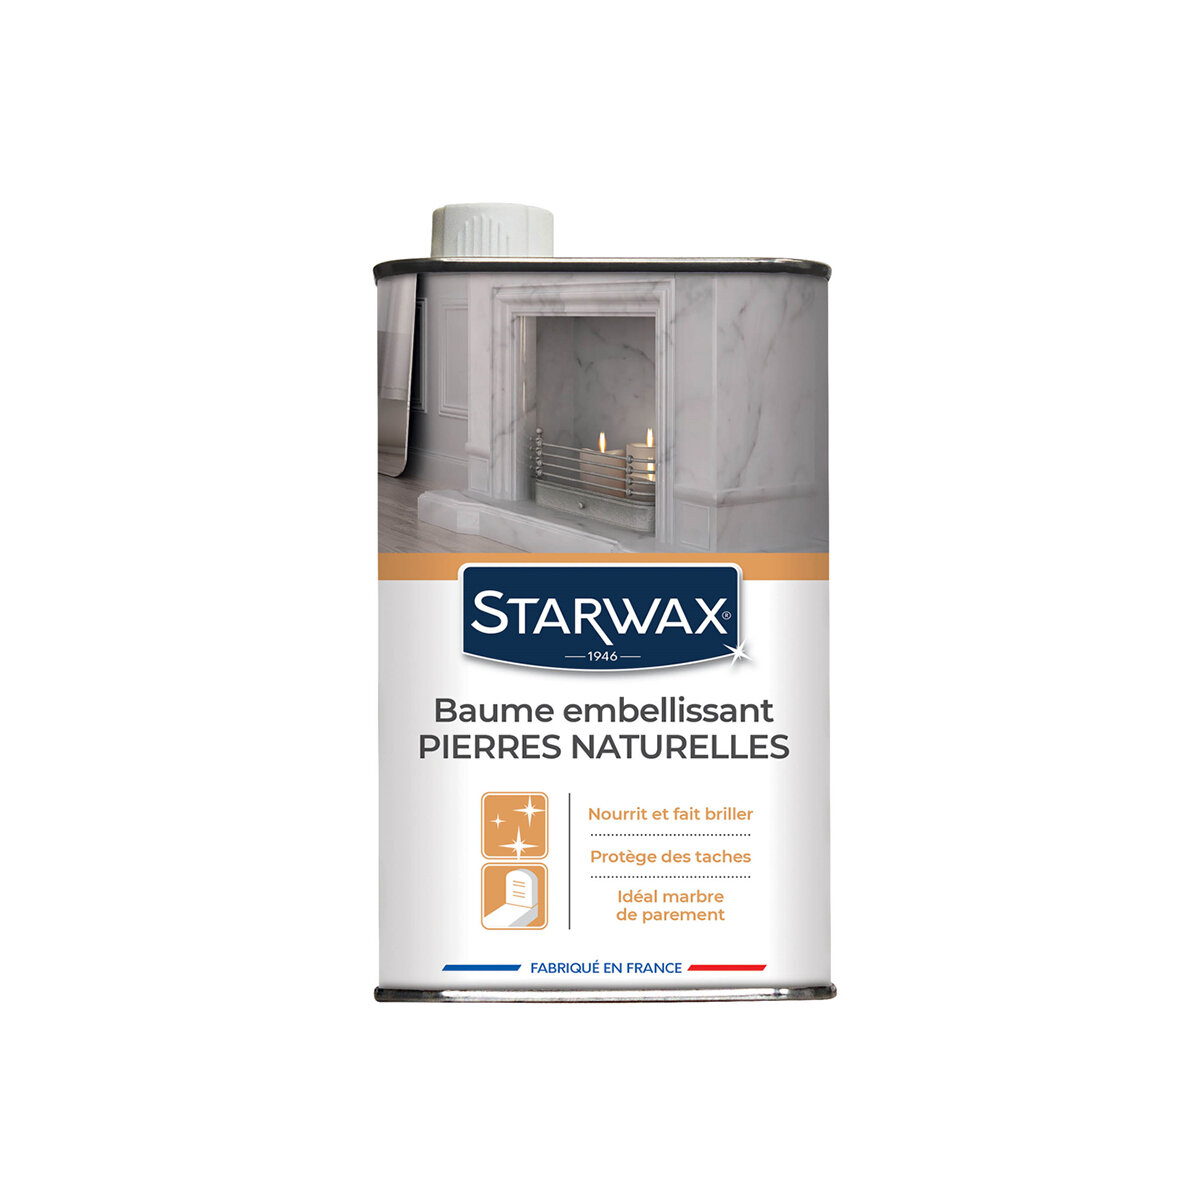 Starwax - Marble embellishing balm, 0,5L